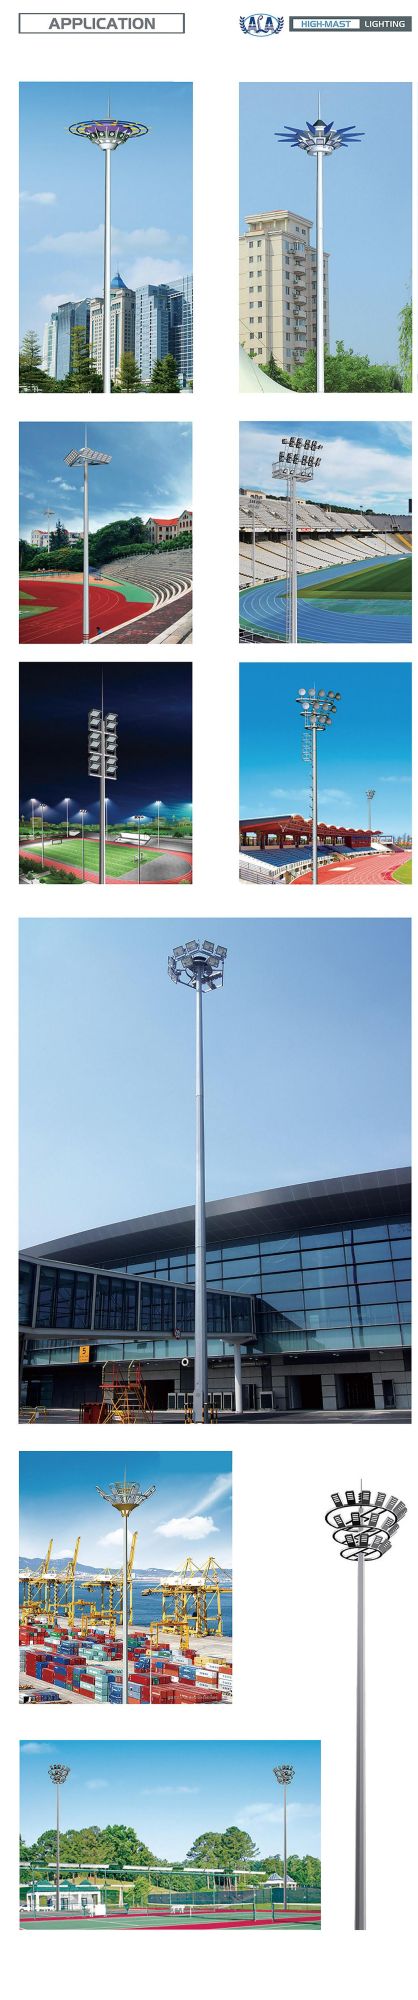 Ala 15m 20m 25m 30m High Mast Light for Square and Park Lighting